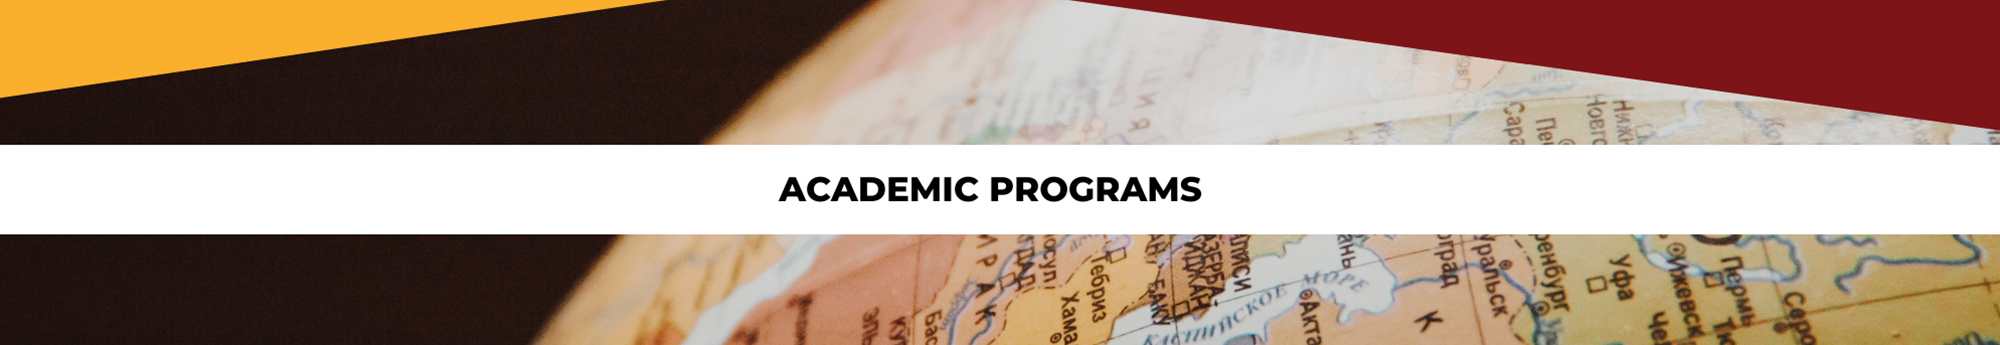 Academic Programs over globe